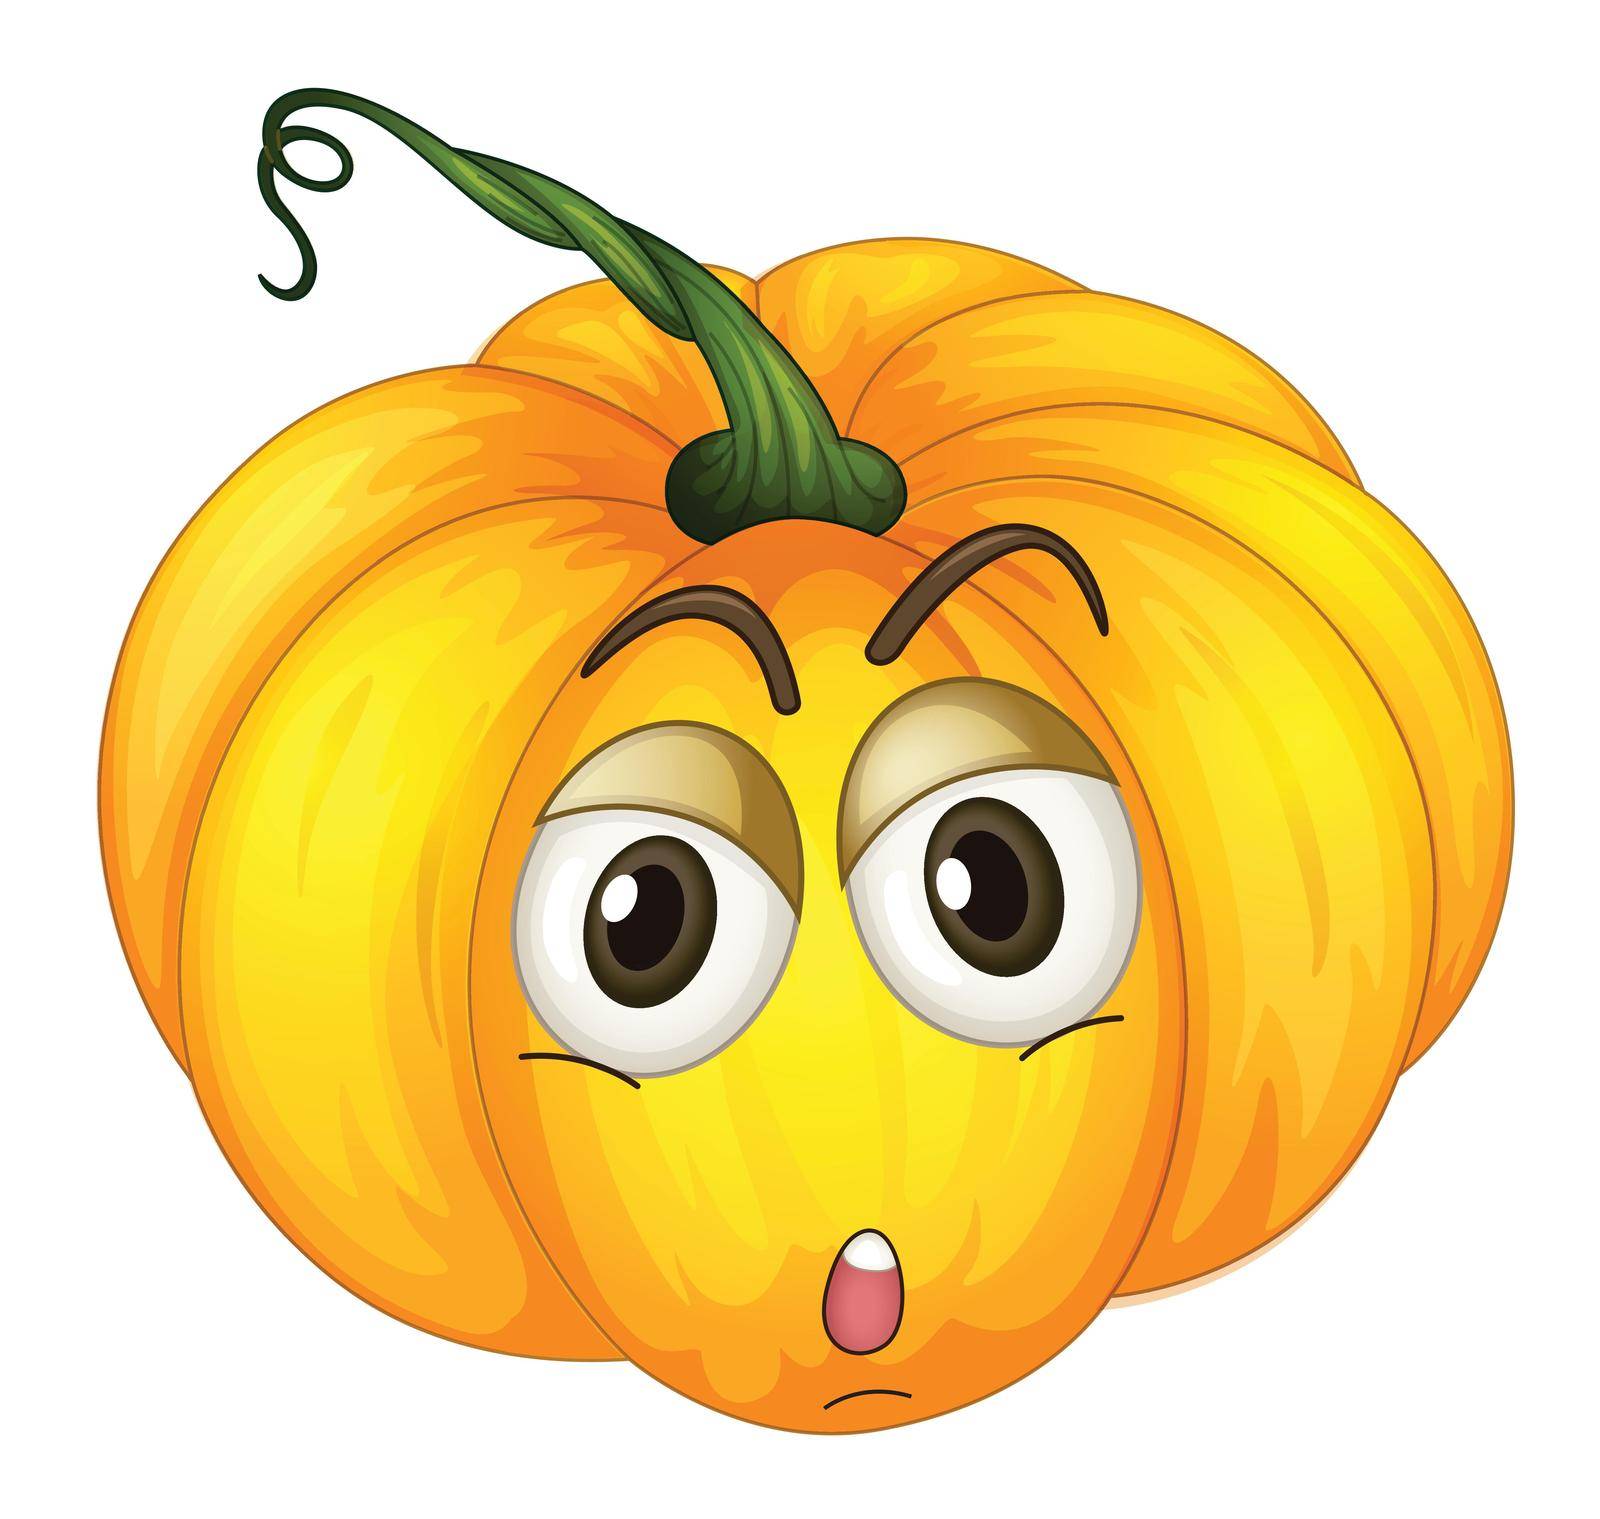 Illustration of a bored pumpkin